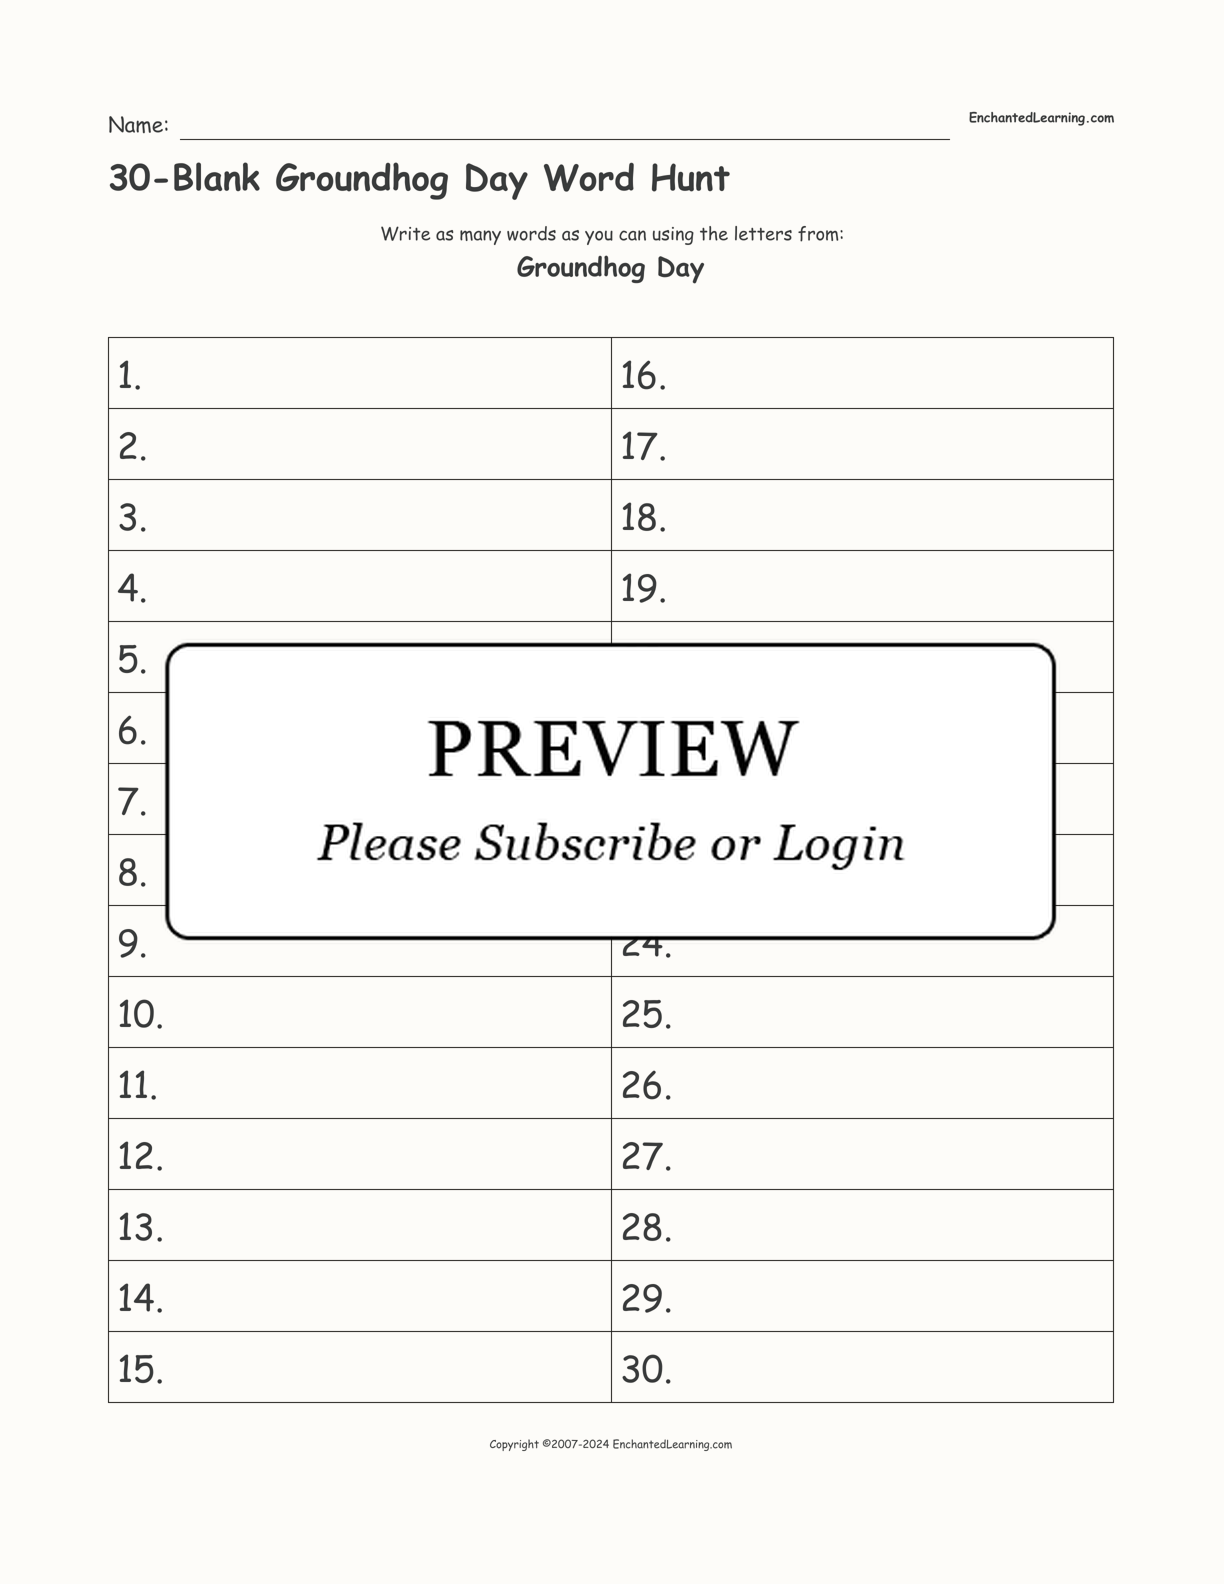 30-Blank Groundhog Day Word Hunt interactive worksheet page 1